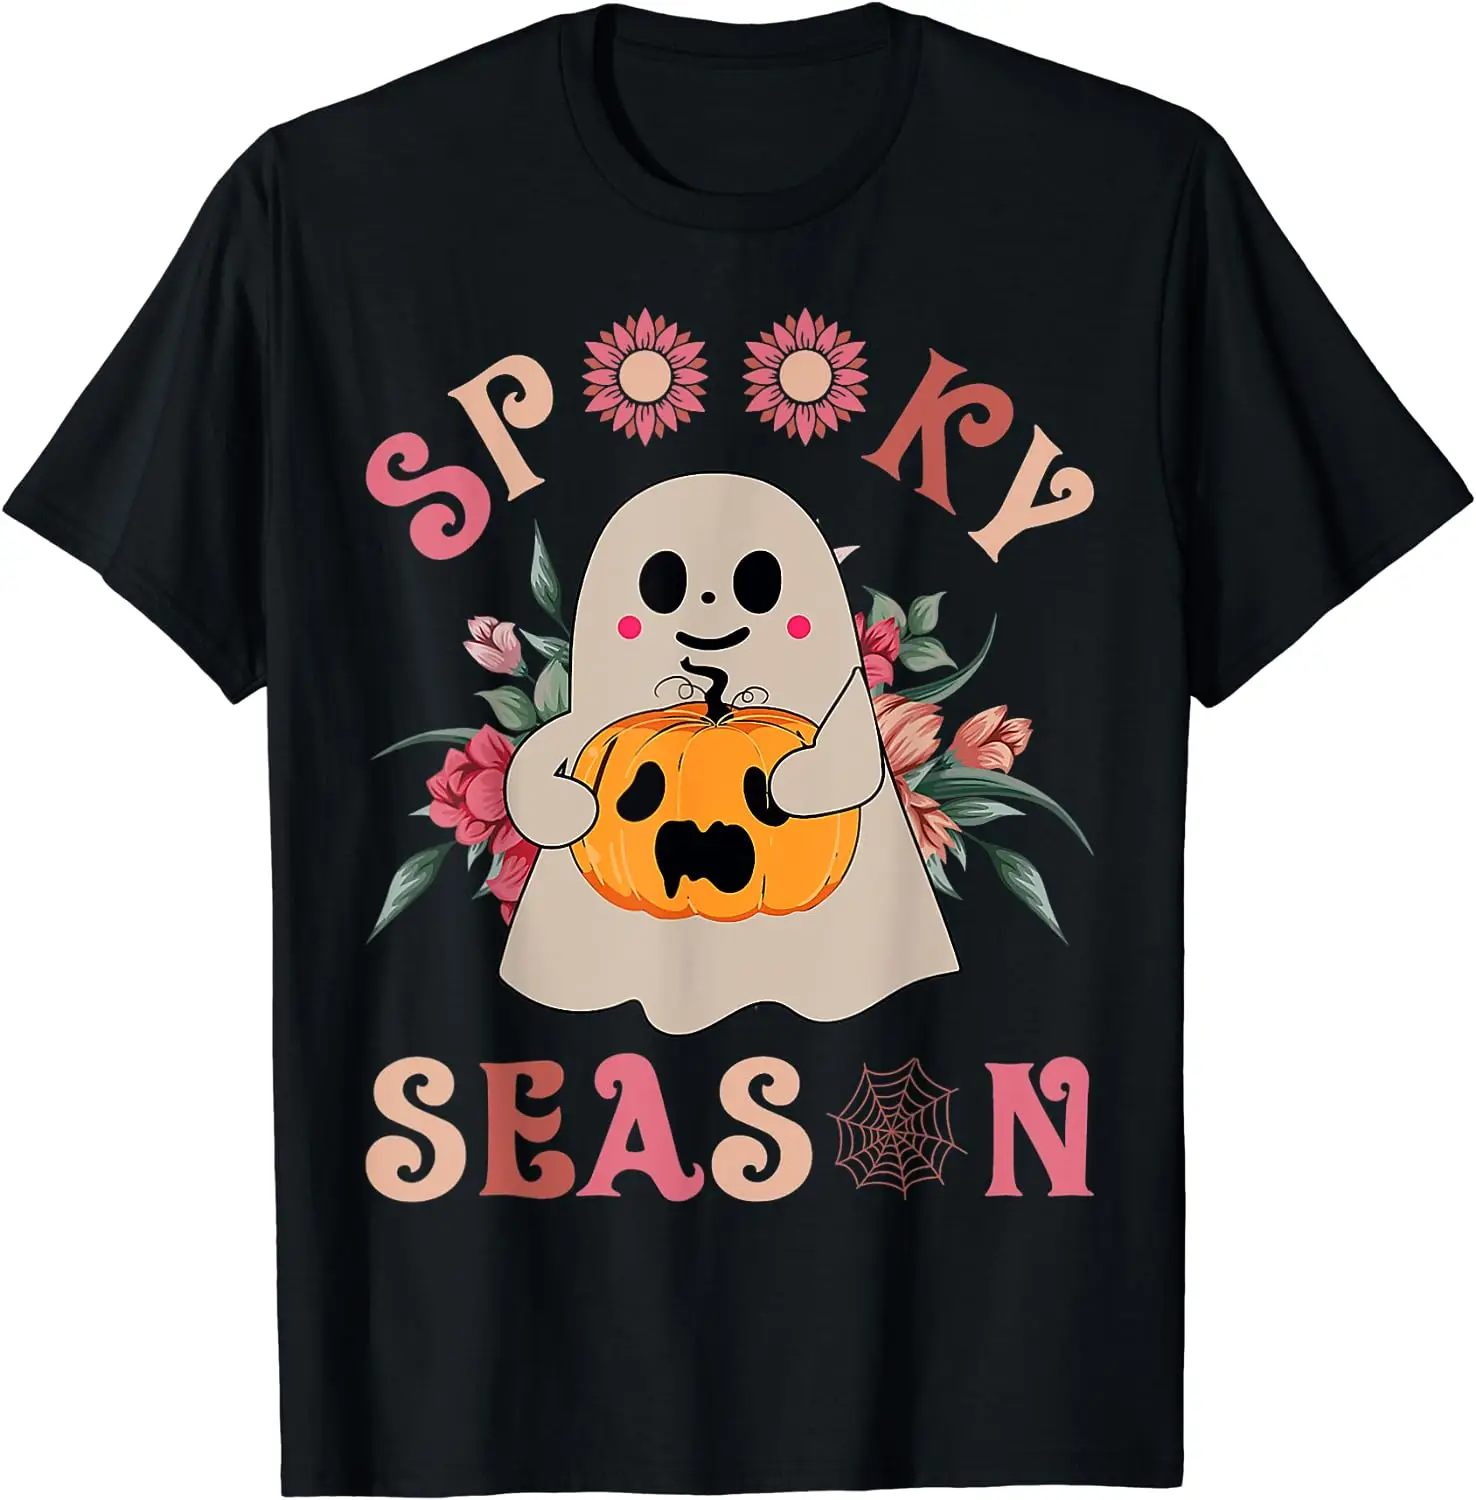 

Spooky Season Cute Ghost Holding Pumpkin Halloween T-Shirt Casual Cotton Daily Four Seasons Tees for Women Kids Holiday TShirts